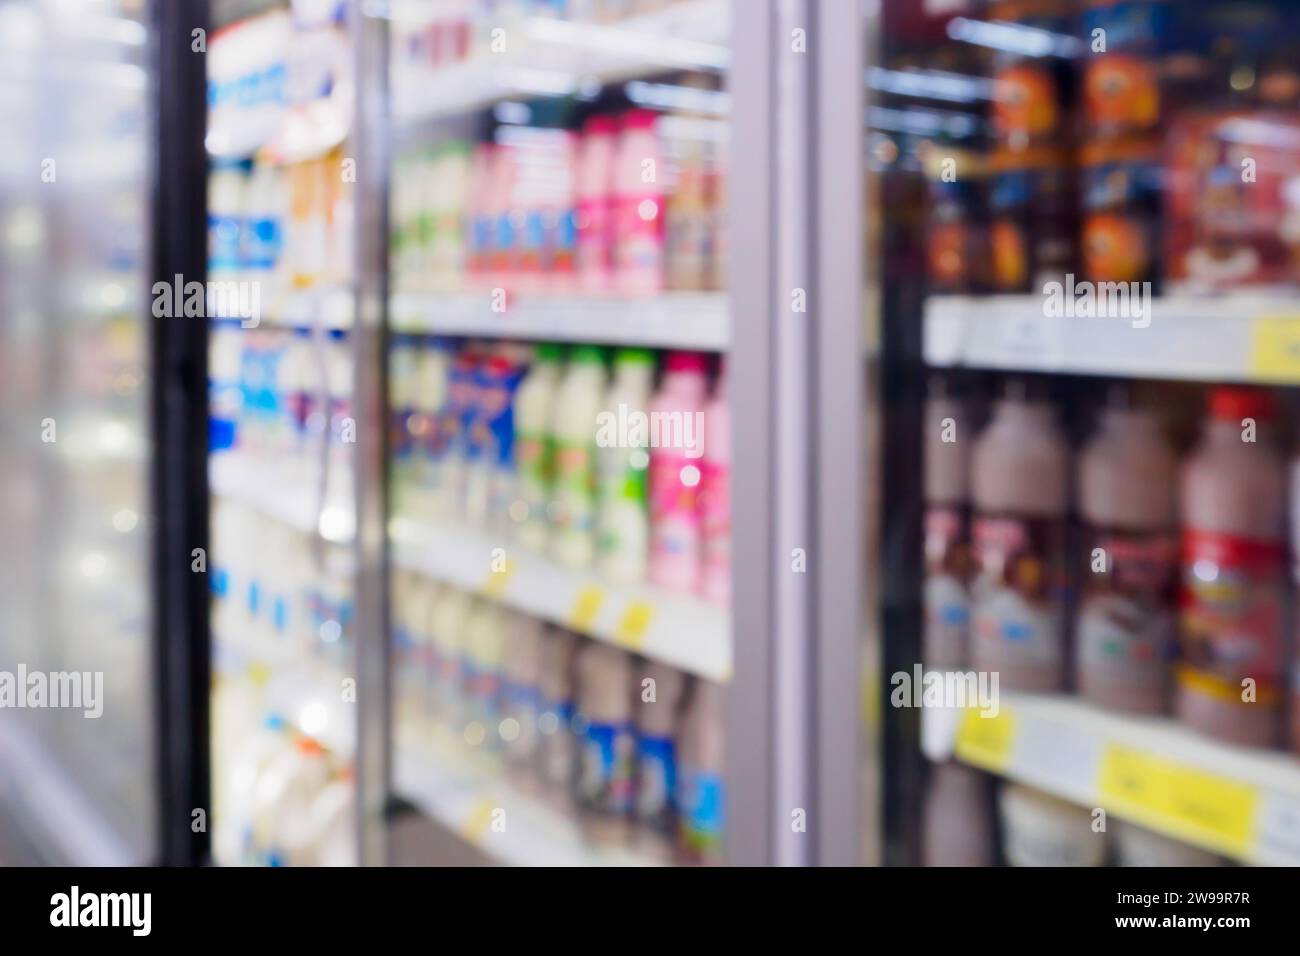 blur dairy product milk bottles on refrigerator shelf in supermarket Stock Photo